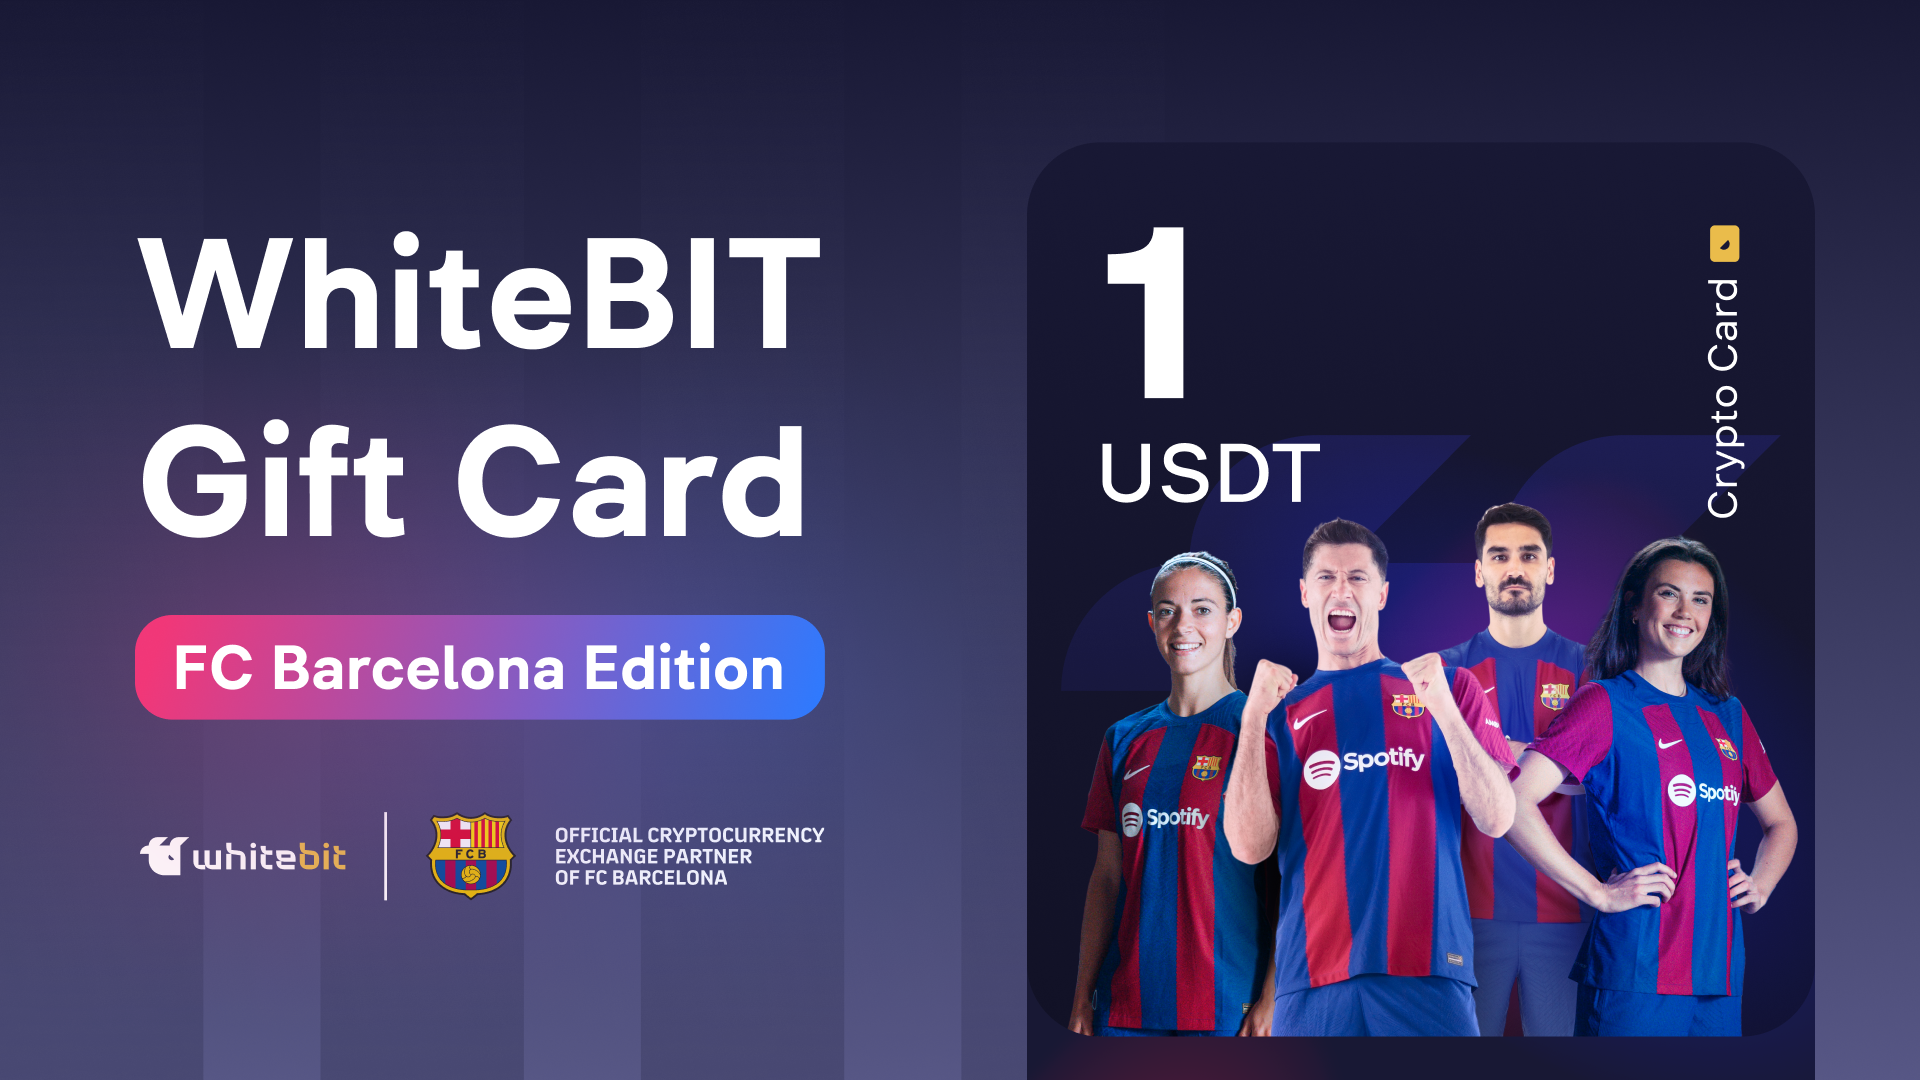 [$ 1.39] WhiteBIT - FC Barcelona Edition - 1 USDT Gift Card